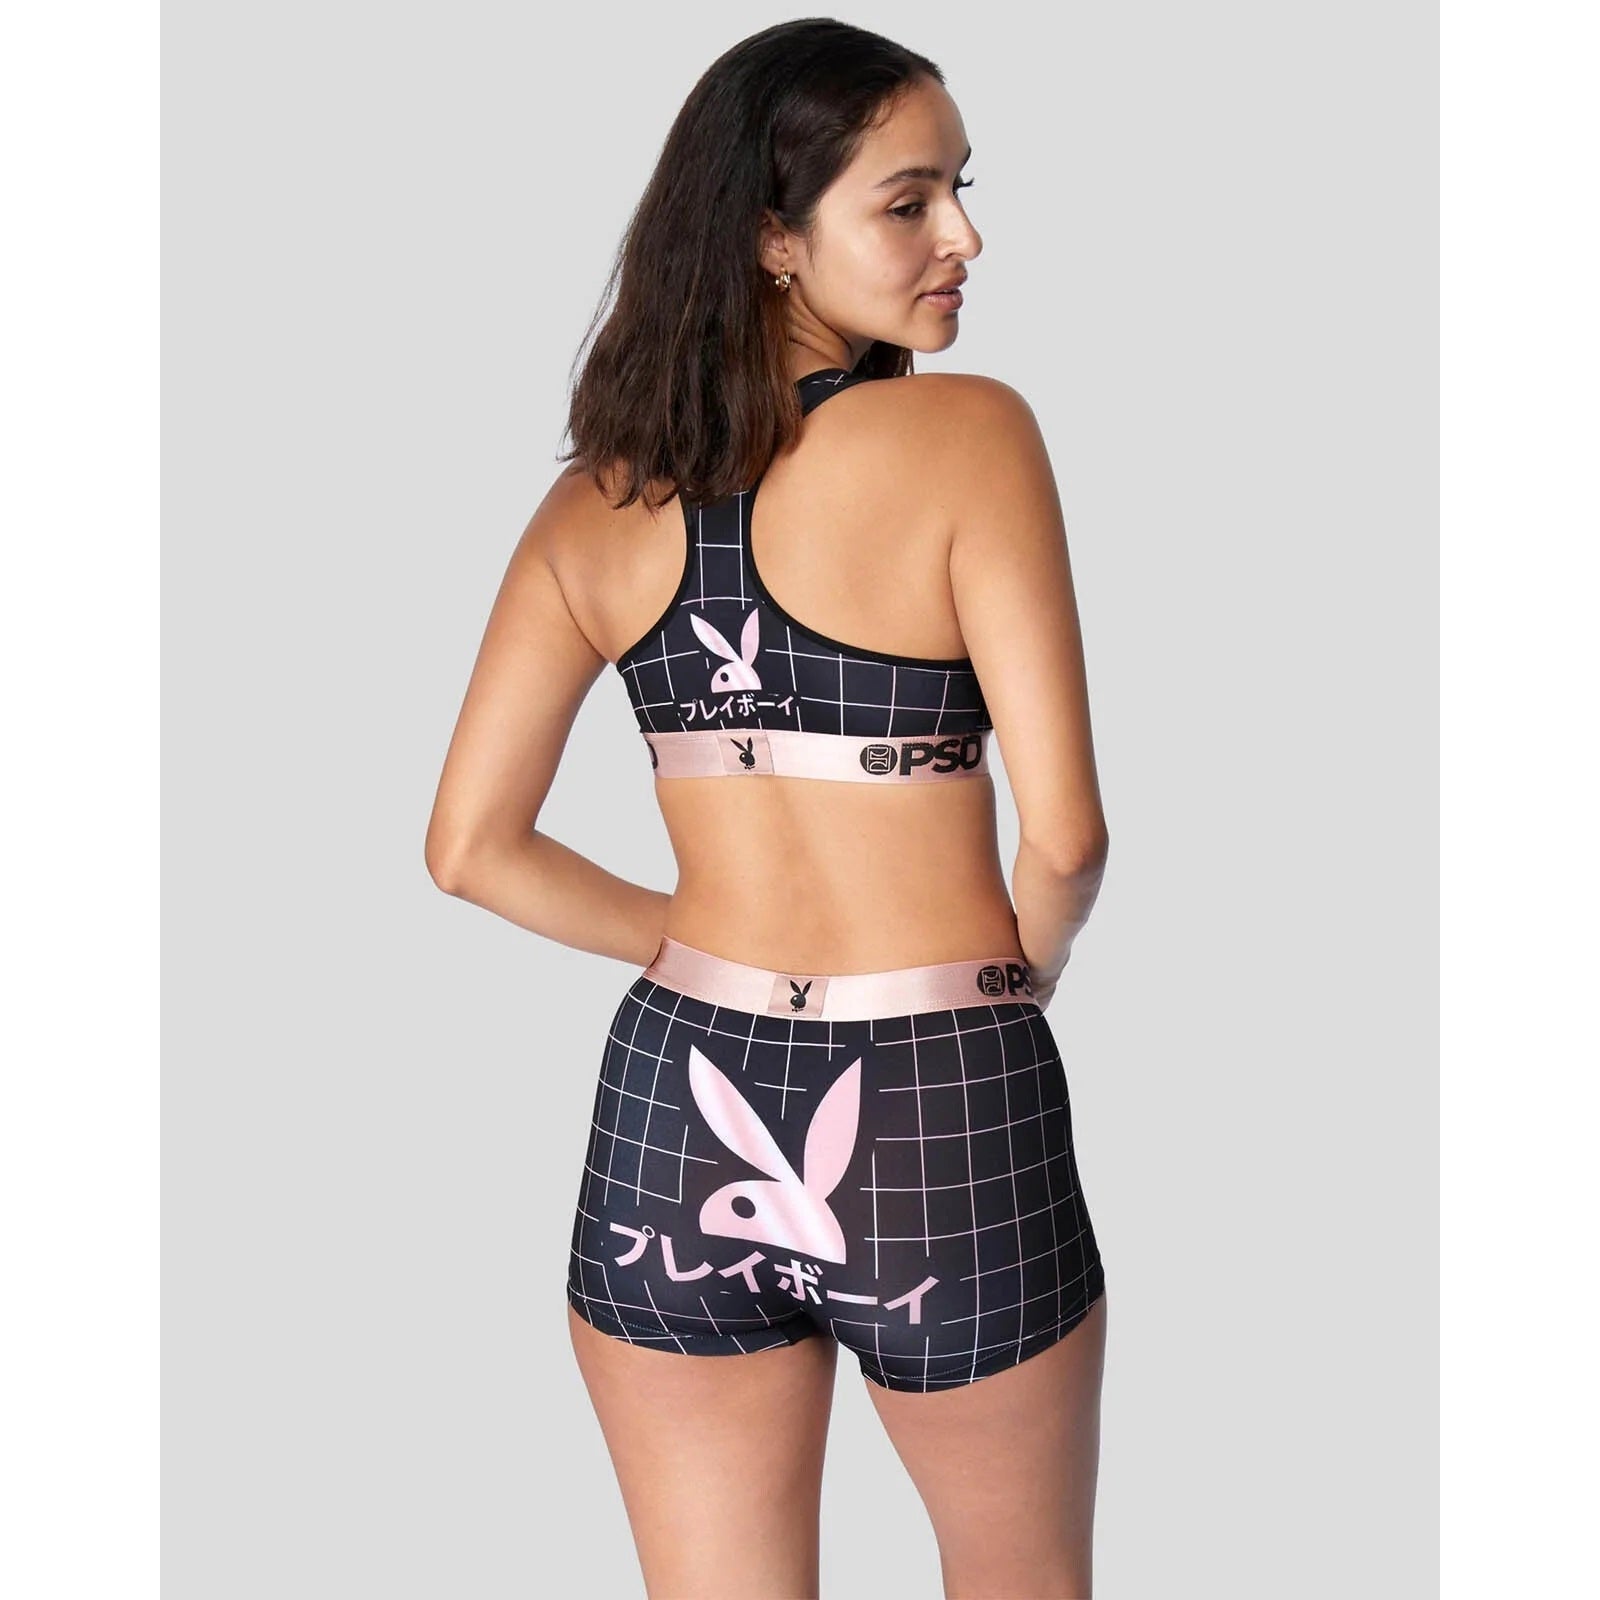  Women's Athletic Underwear - PSD / Women's Athletic